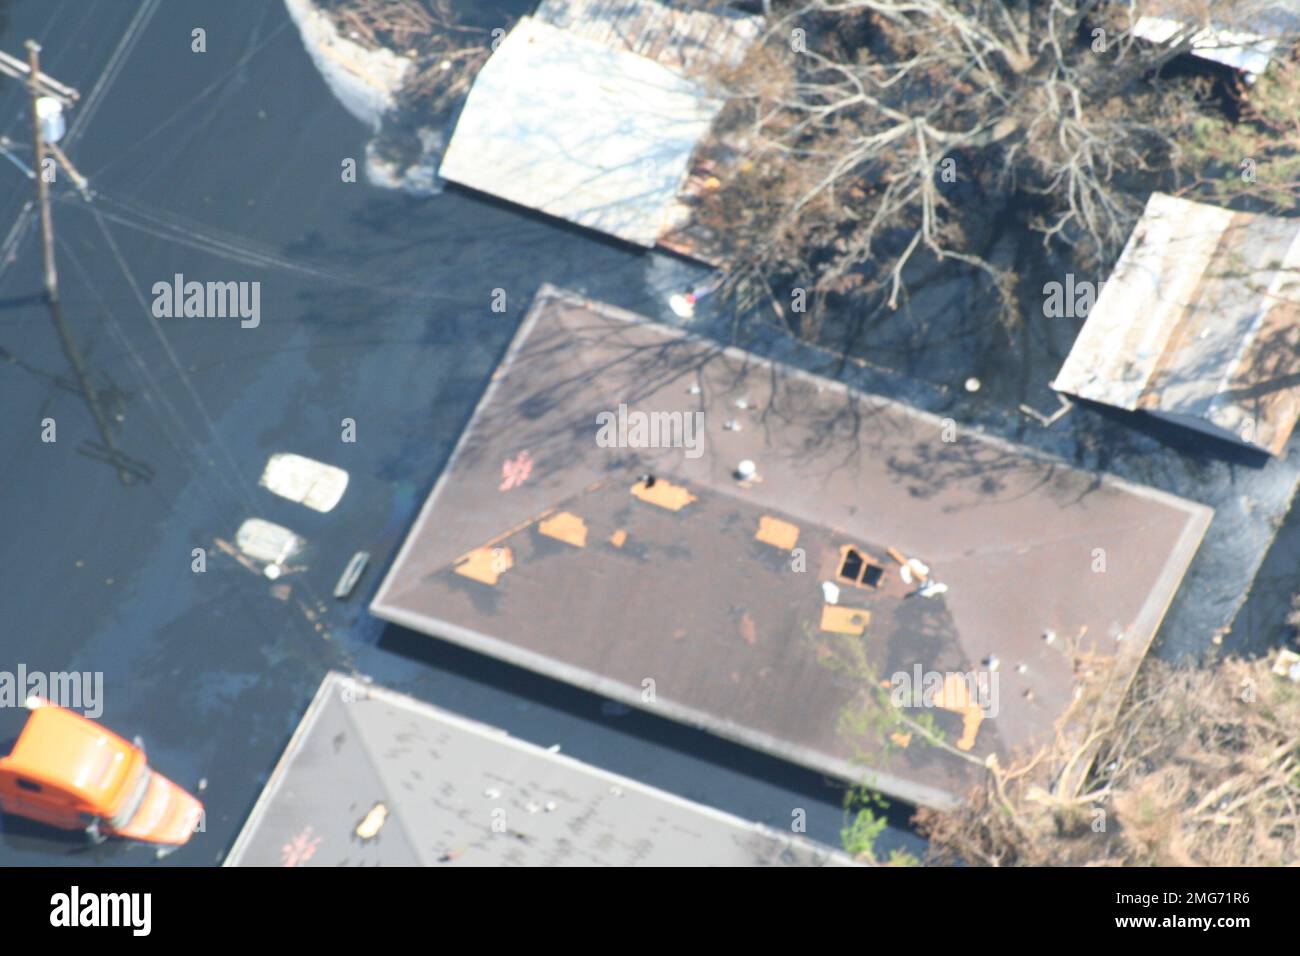 hurricane katrina aftermath tarps on roofs